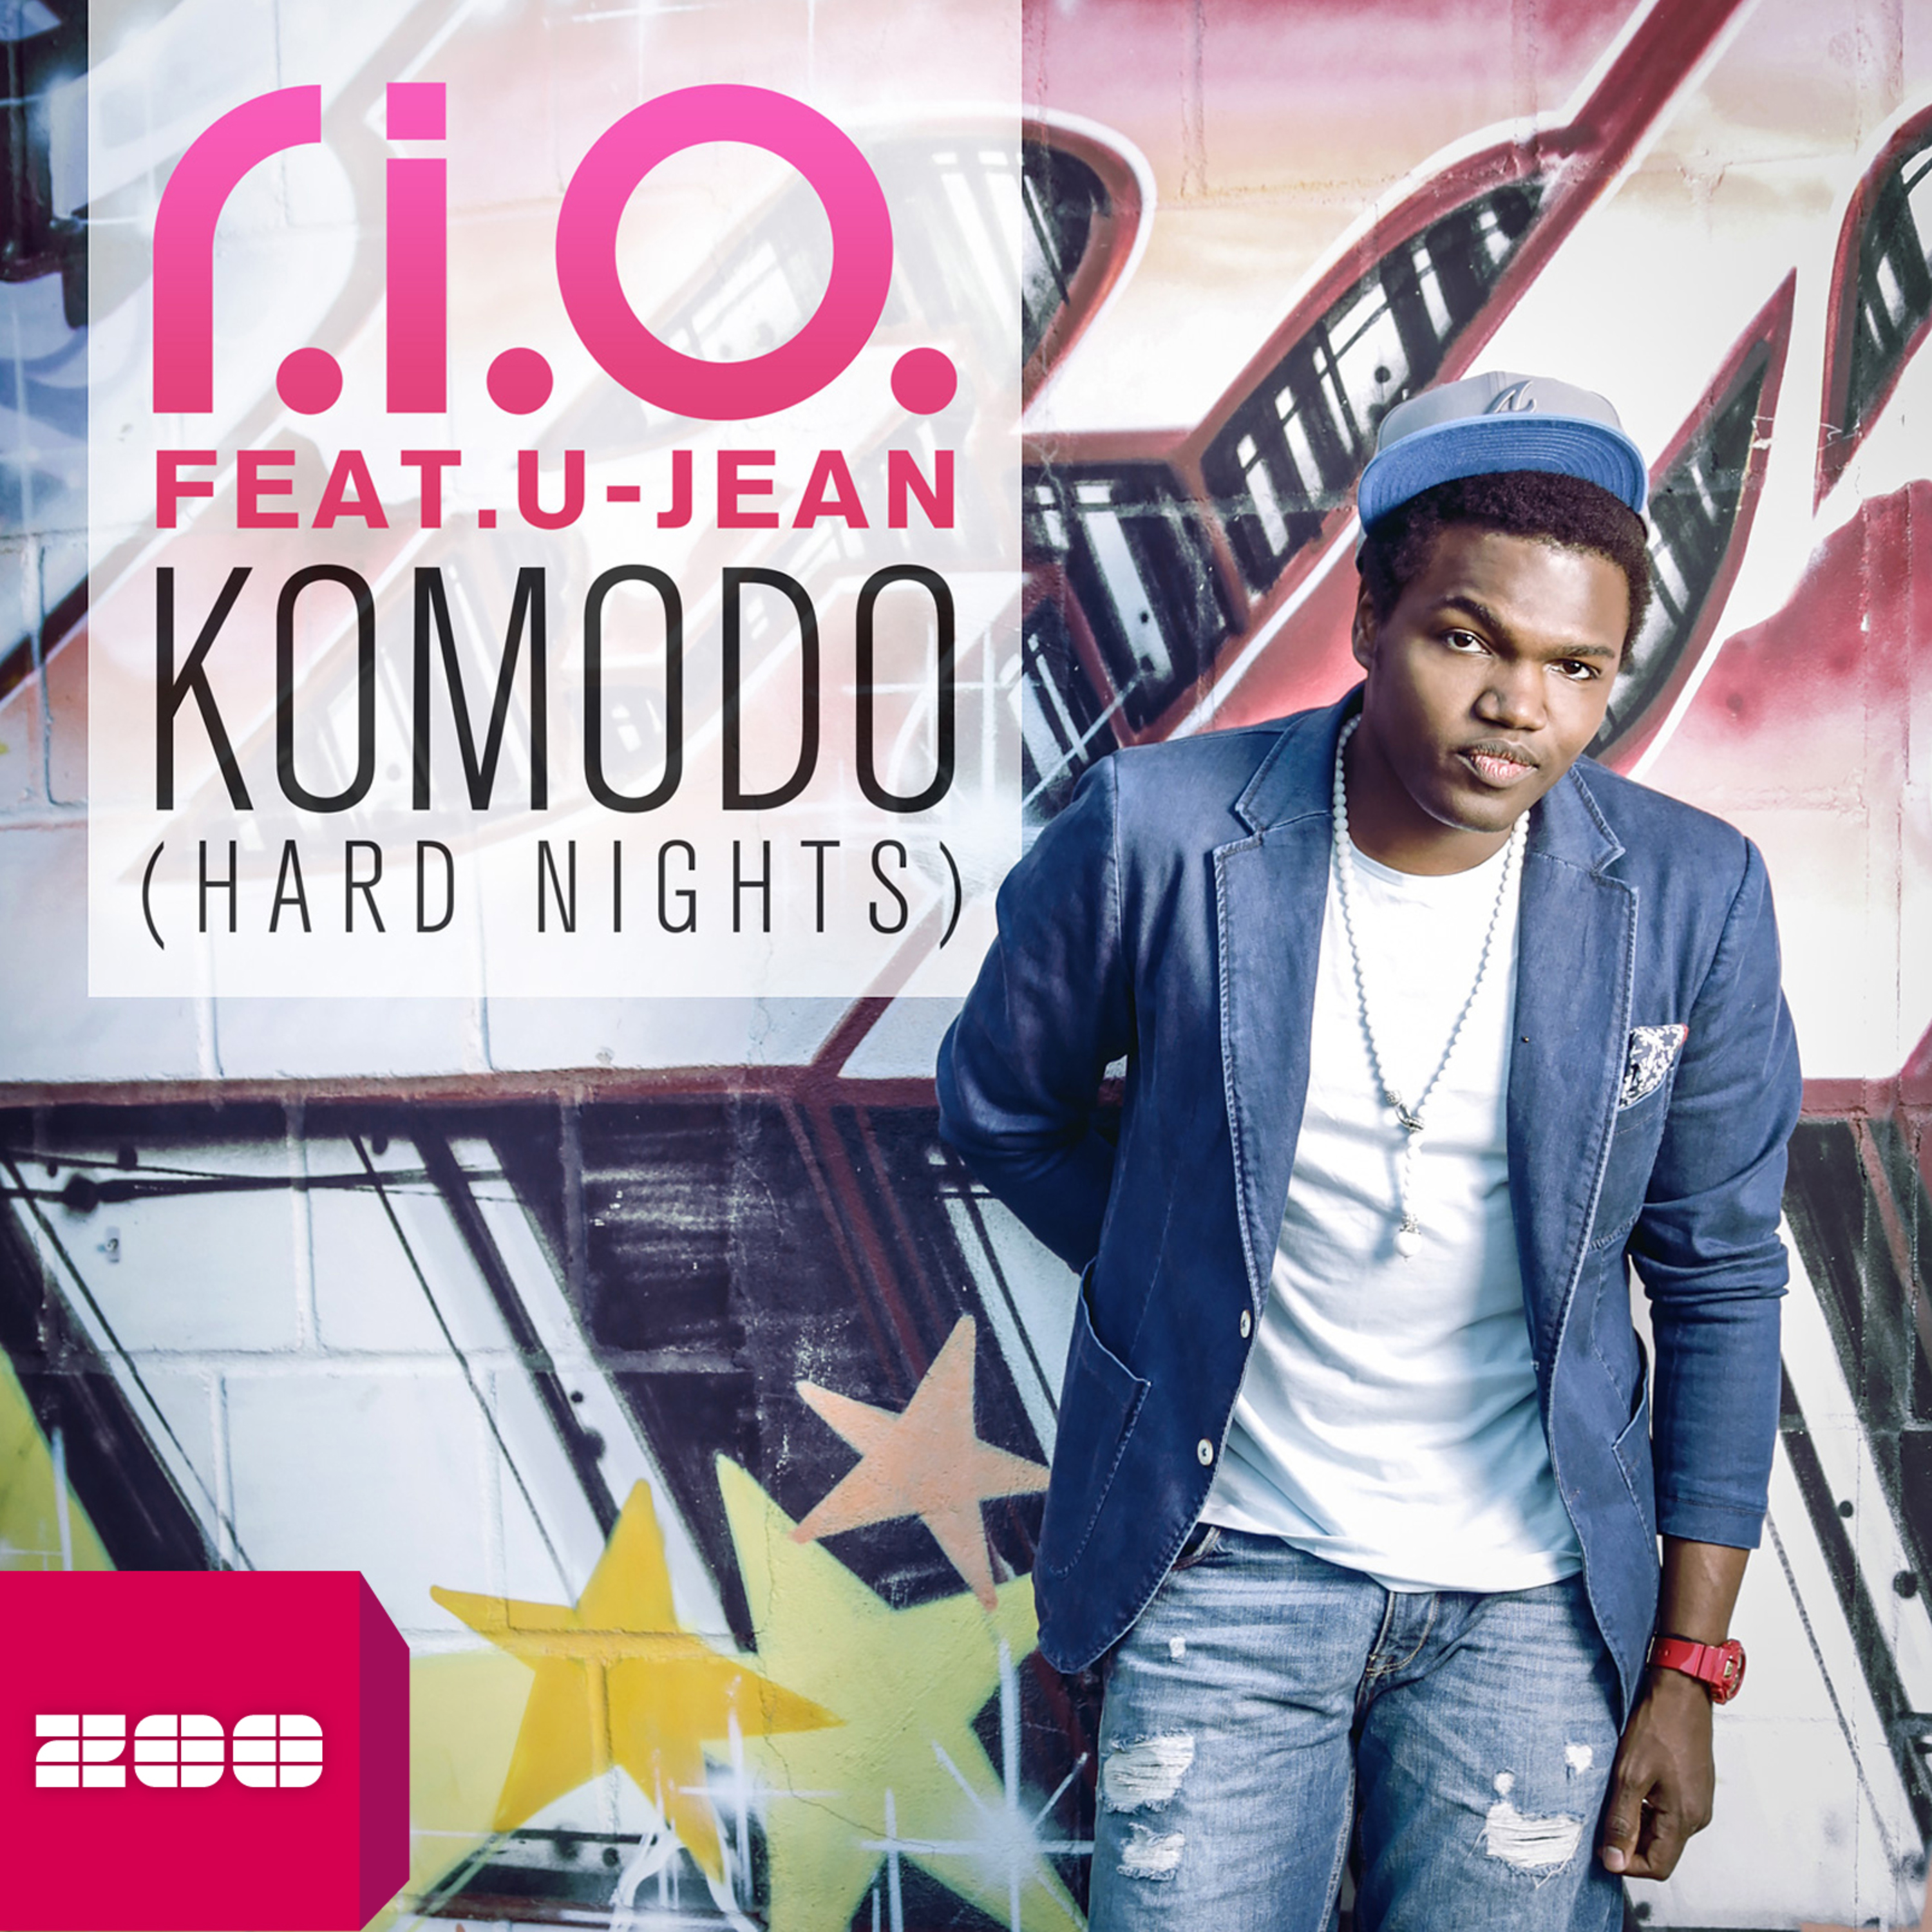 Komodo (Hard Nights) (Extended Mix)